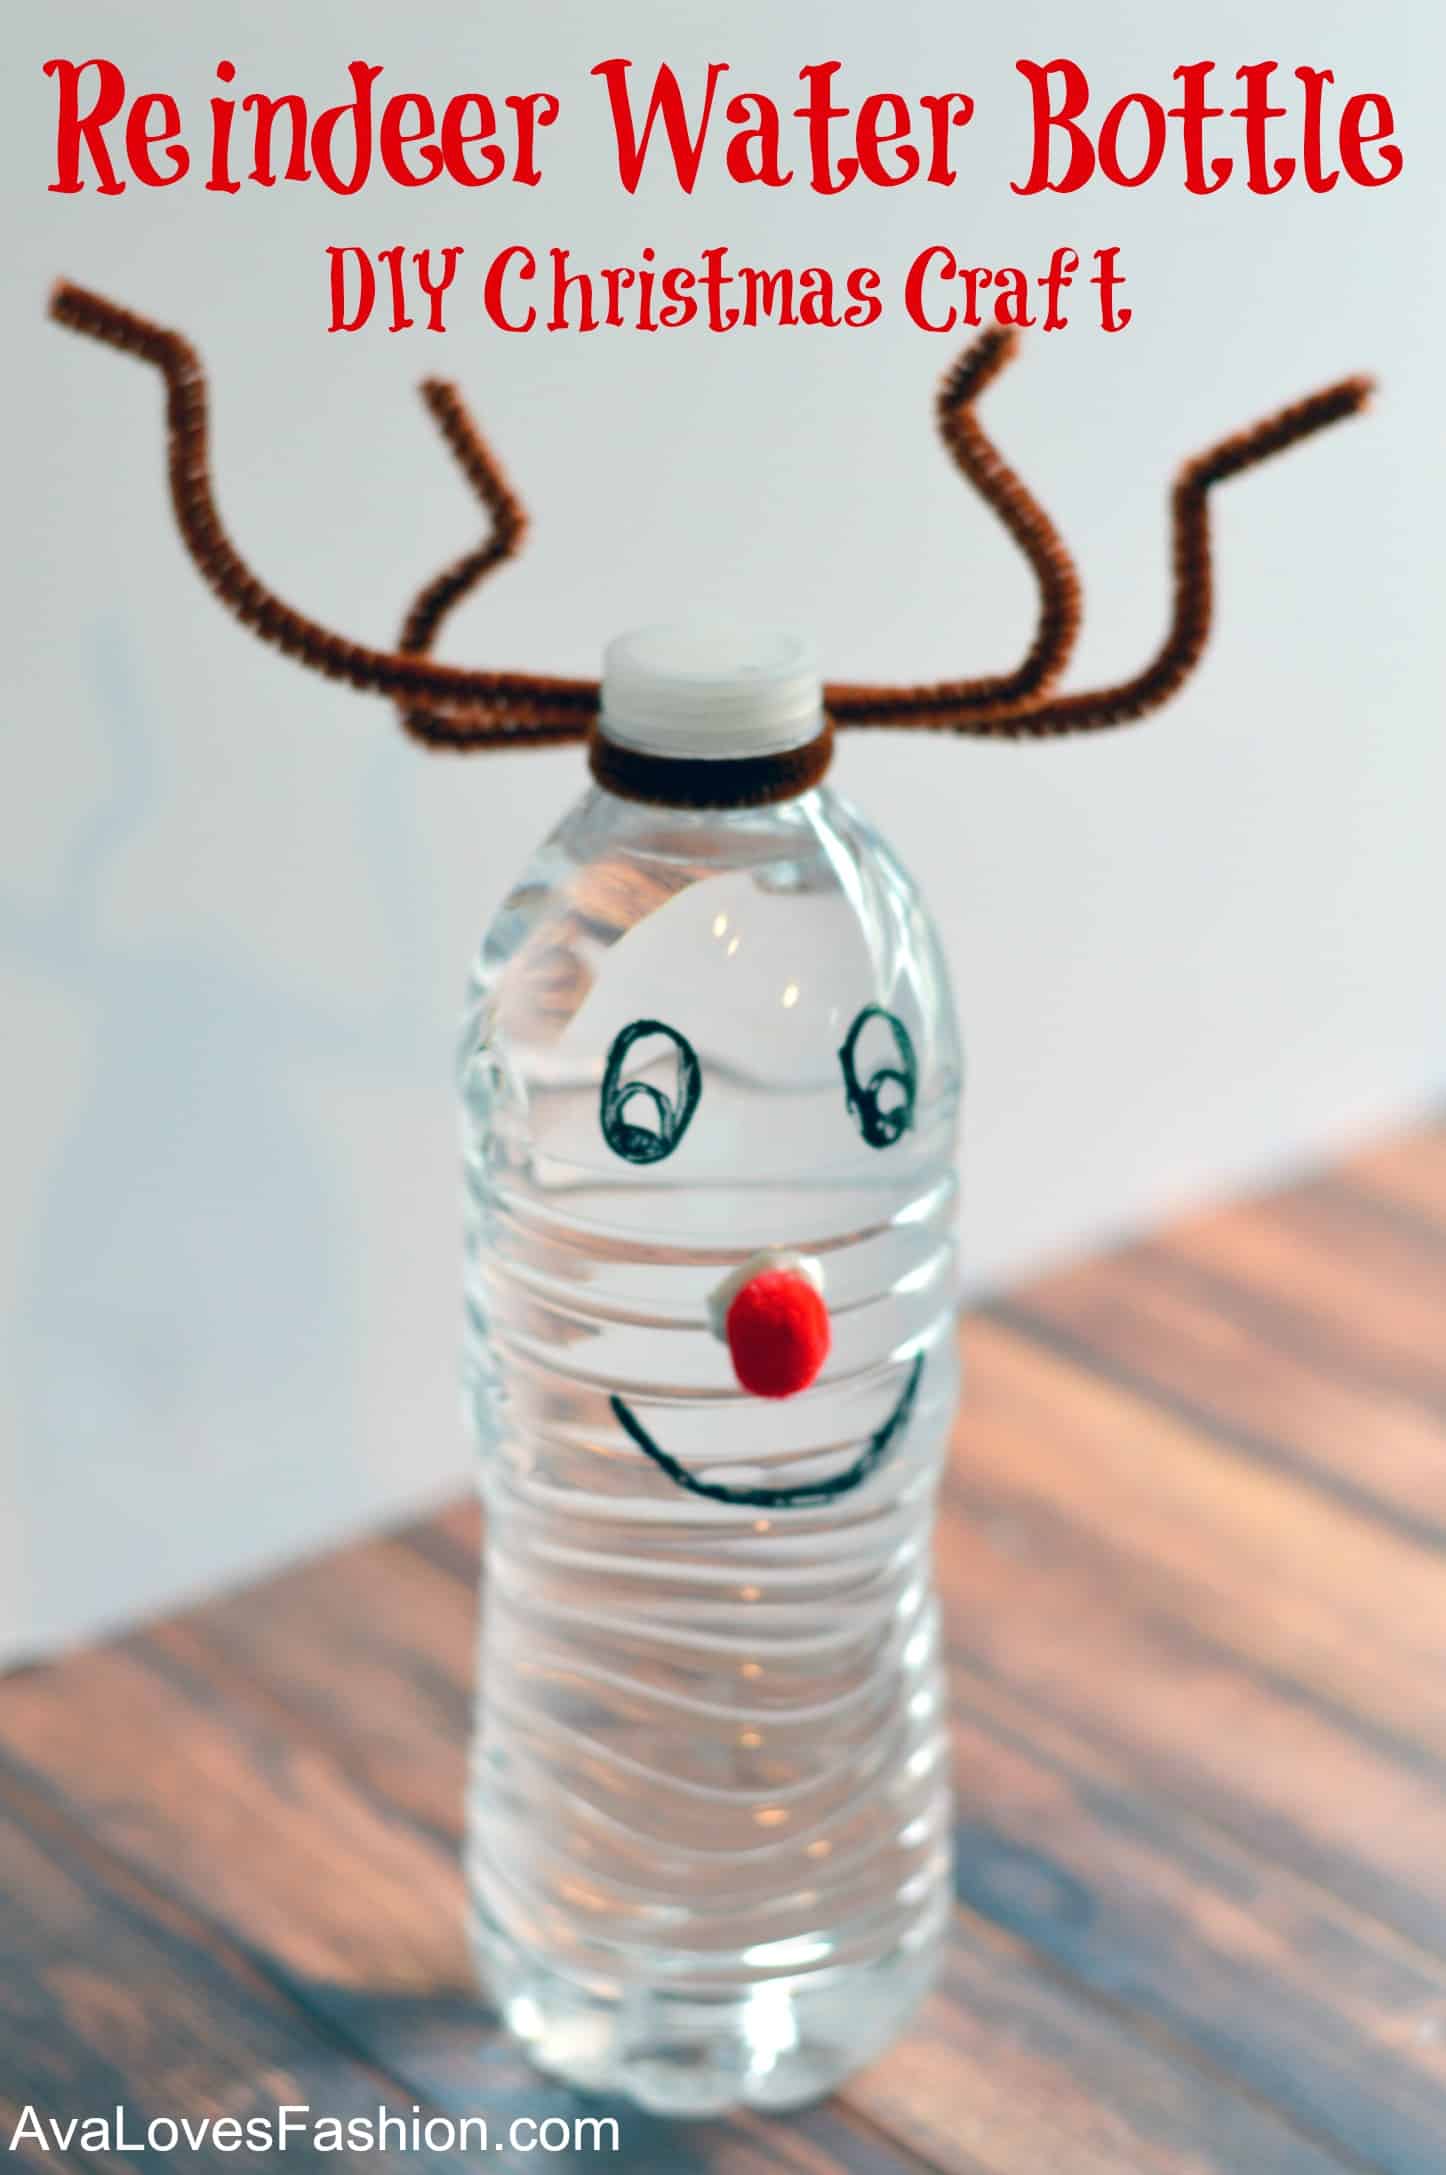 Reindeer water bottles